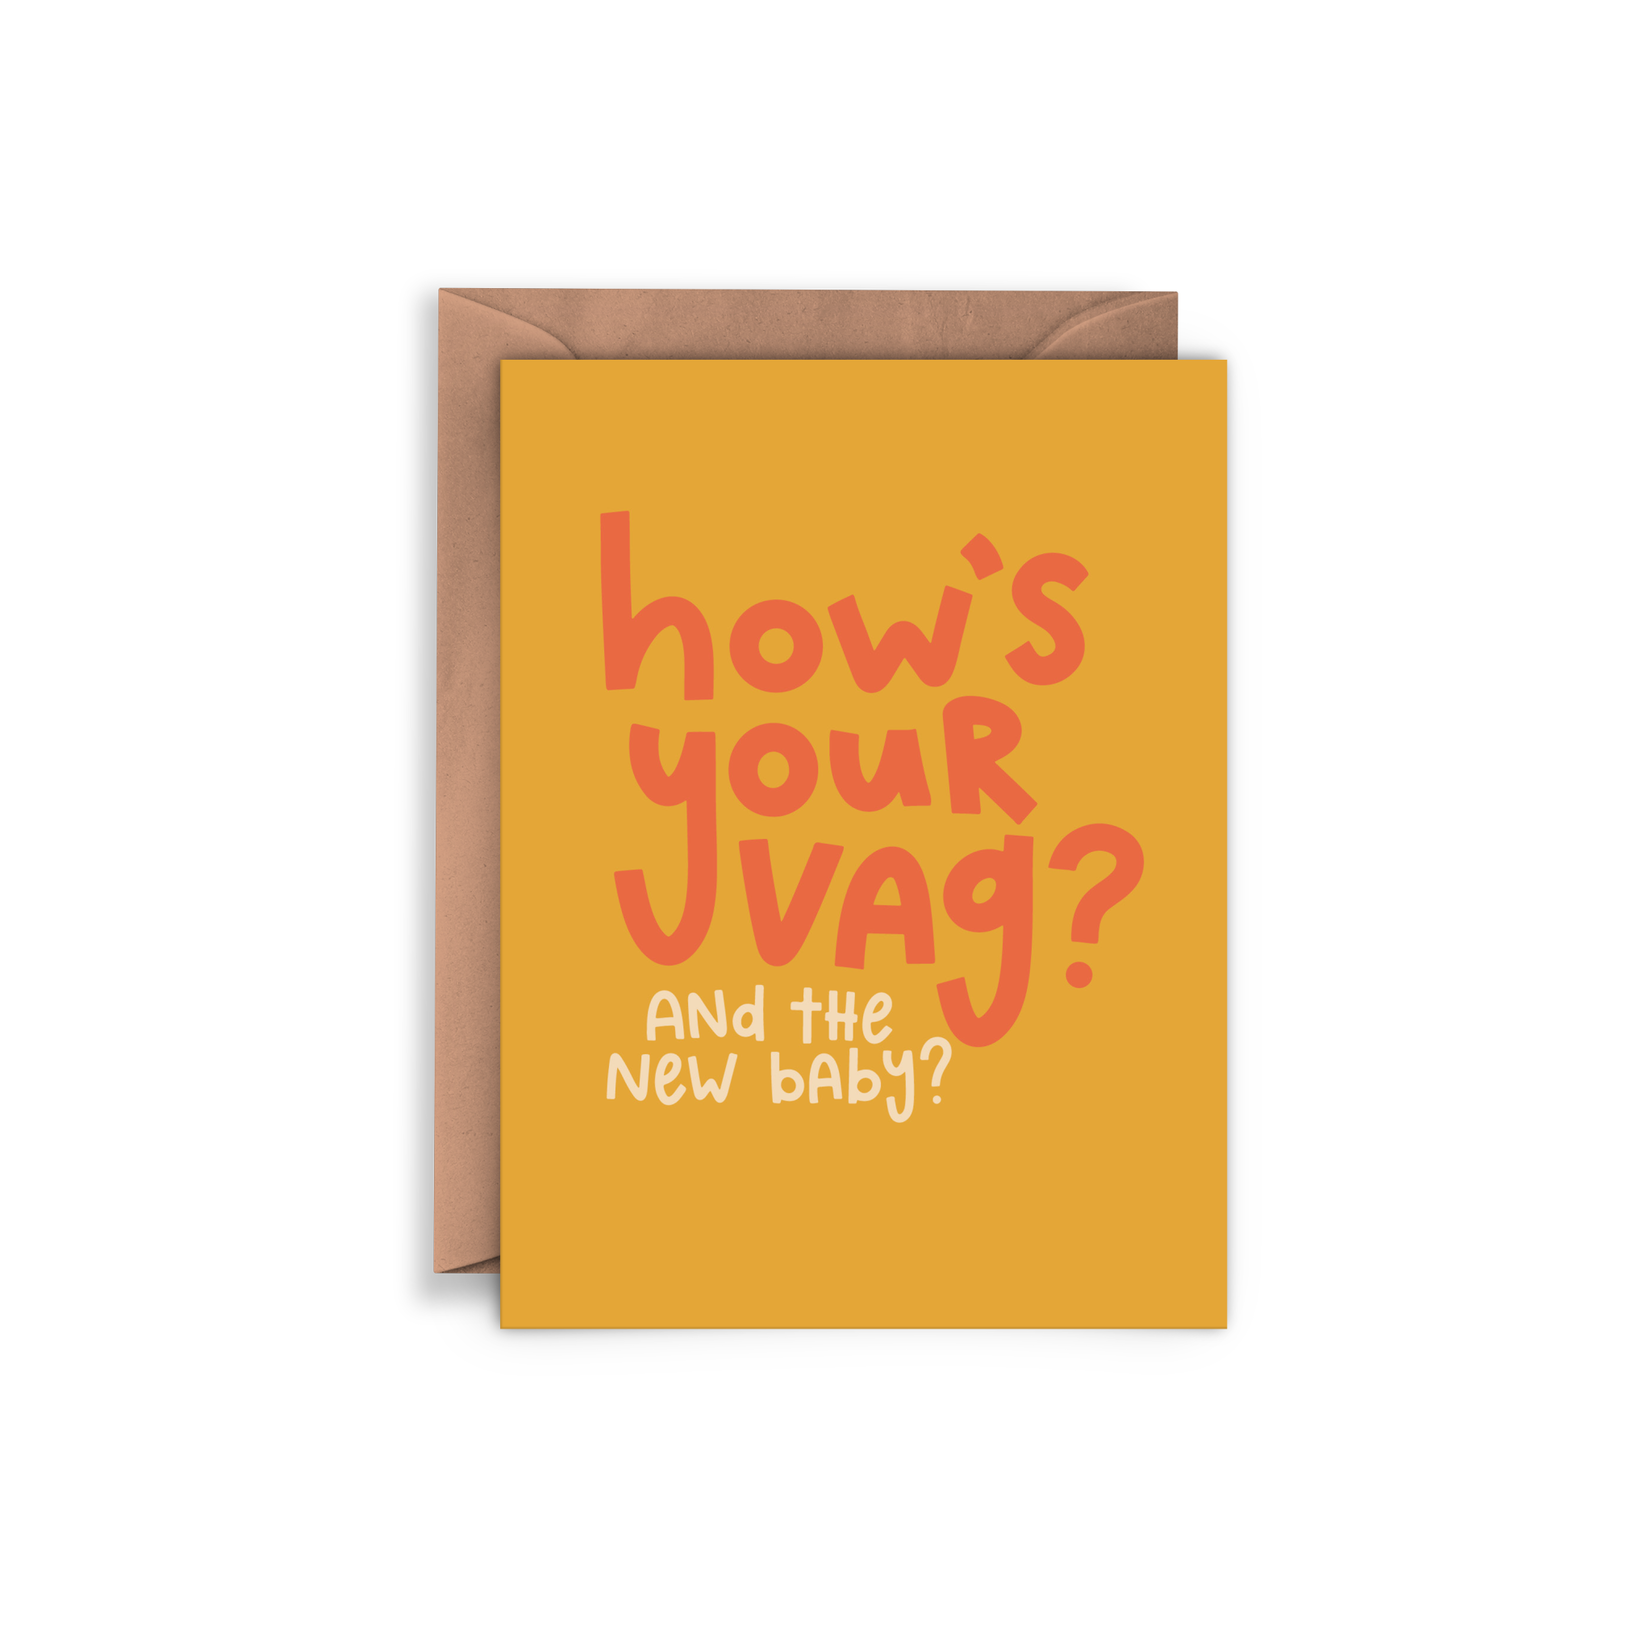 Twentysome Design Twentysome Design Hows Your Vag? Feminist New Baby Card